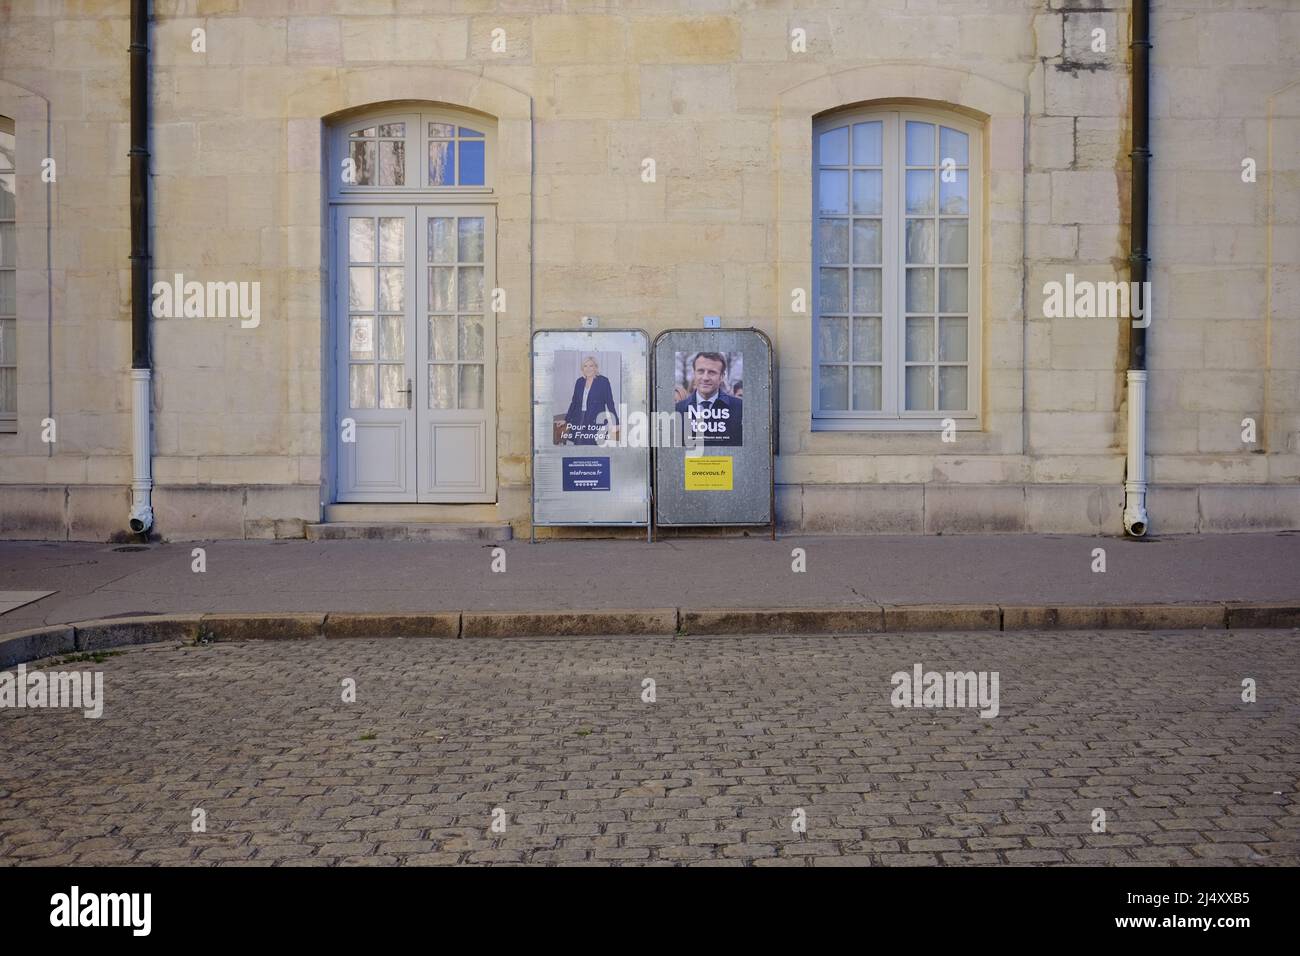 Emmanuel Macron & Marine Le Pen election posters Stock Photo